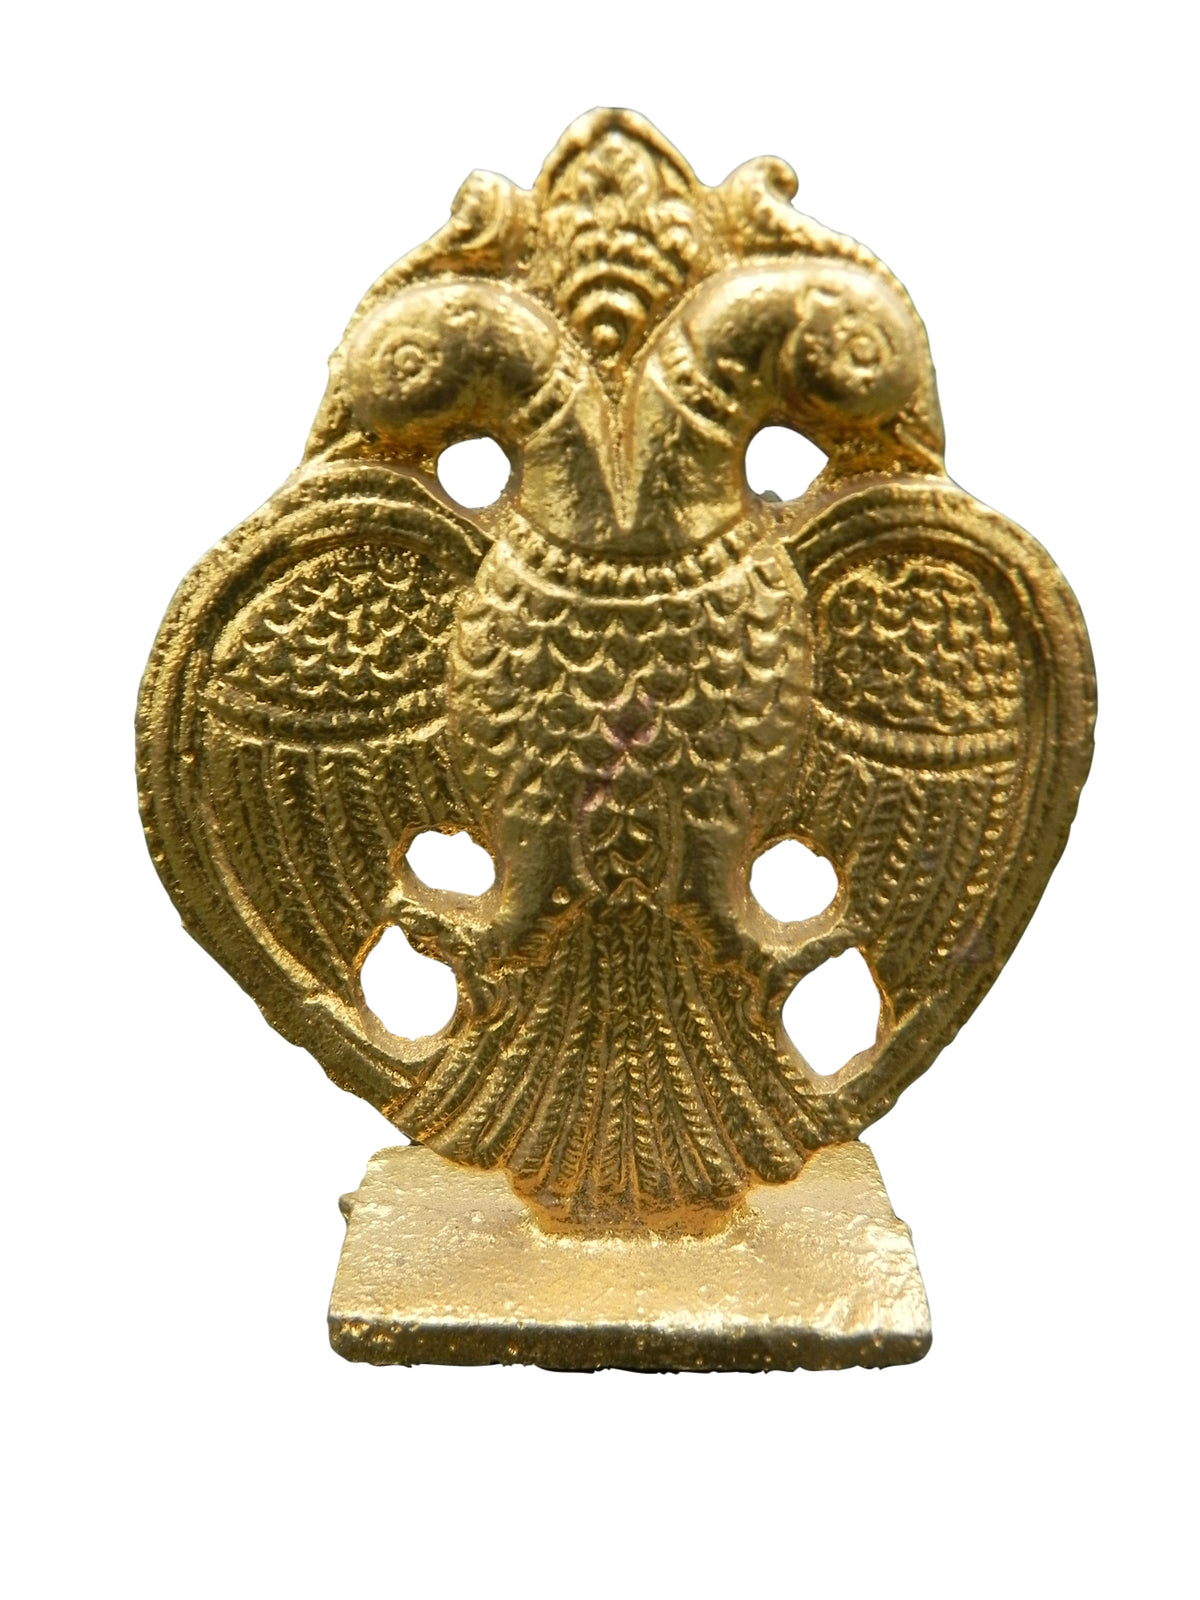 Garuda / Gandaberunda brass idol